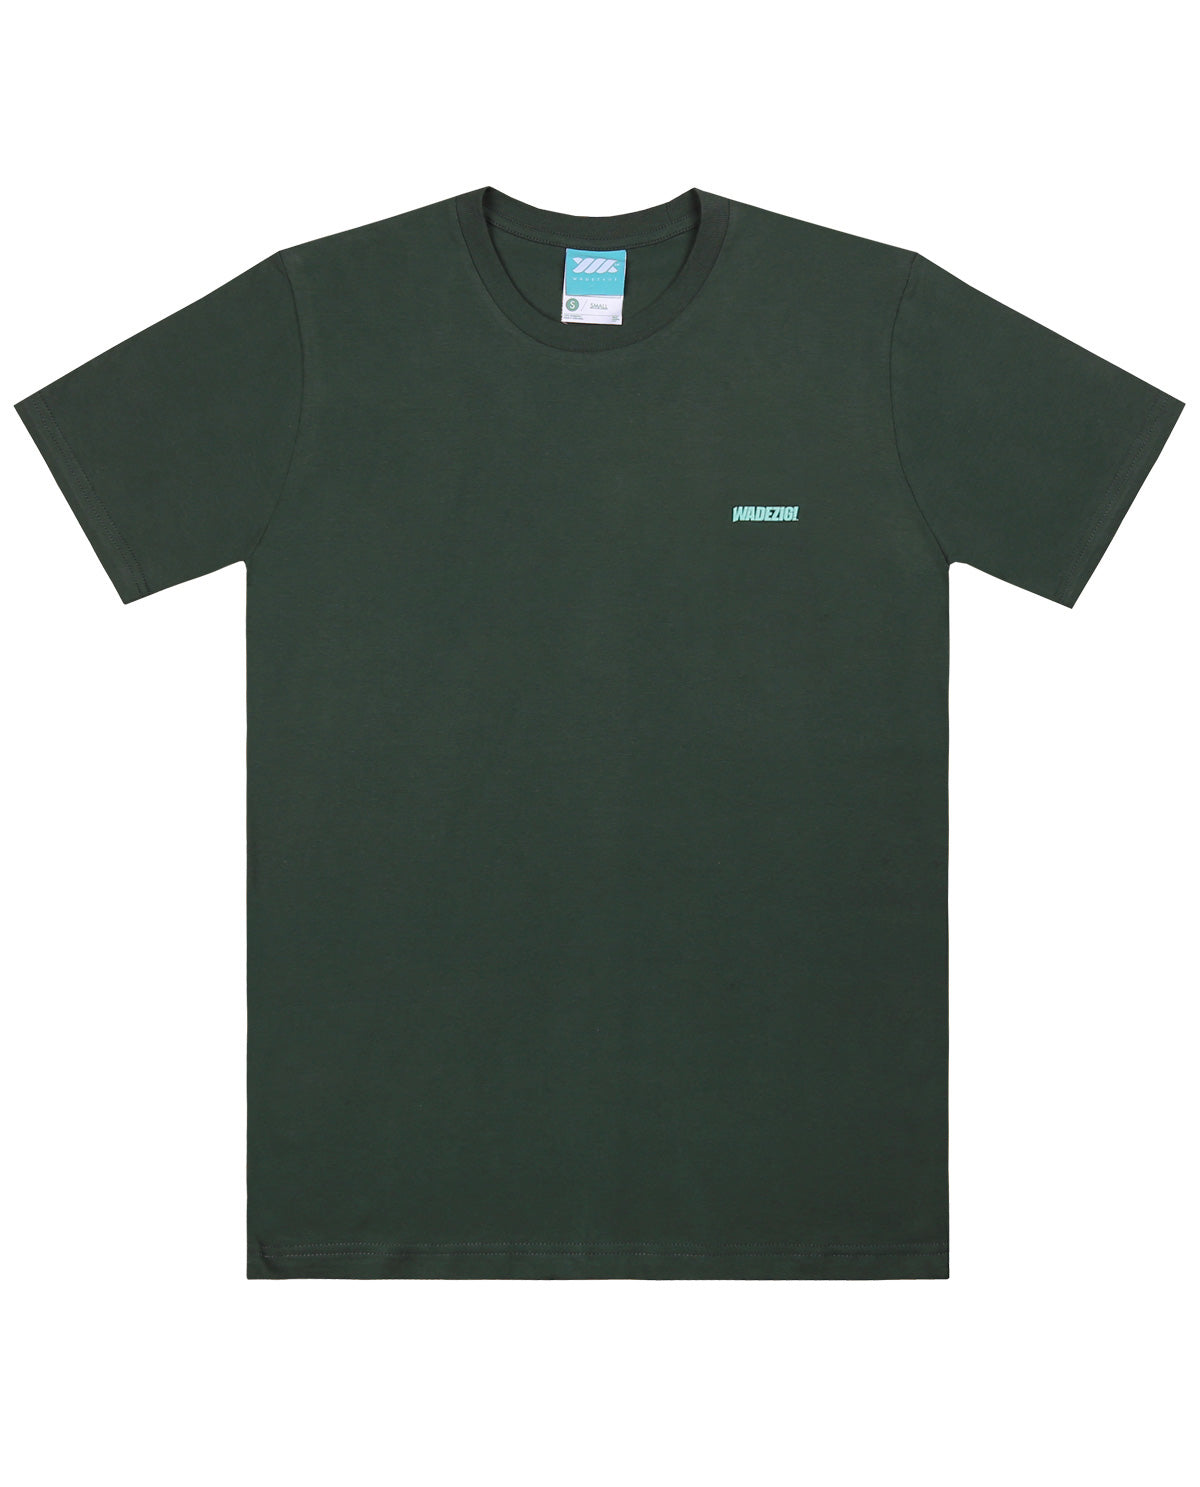 Wadezig! T-Shirt - Layout Green #2